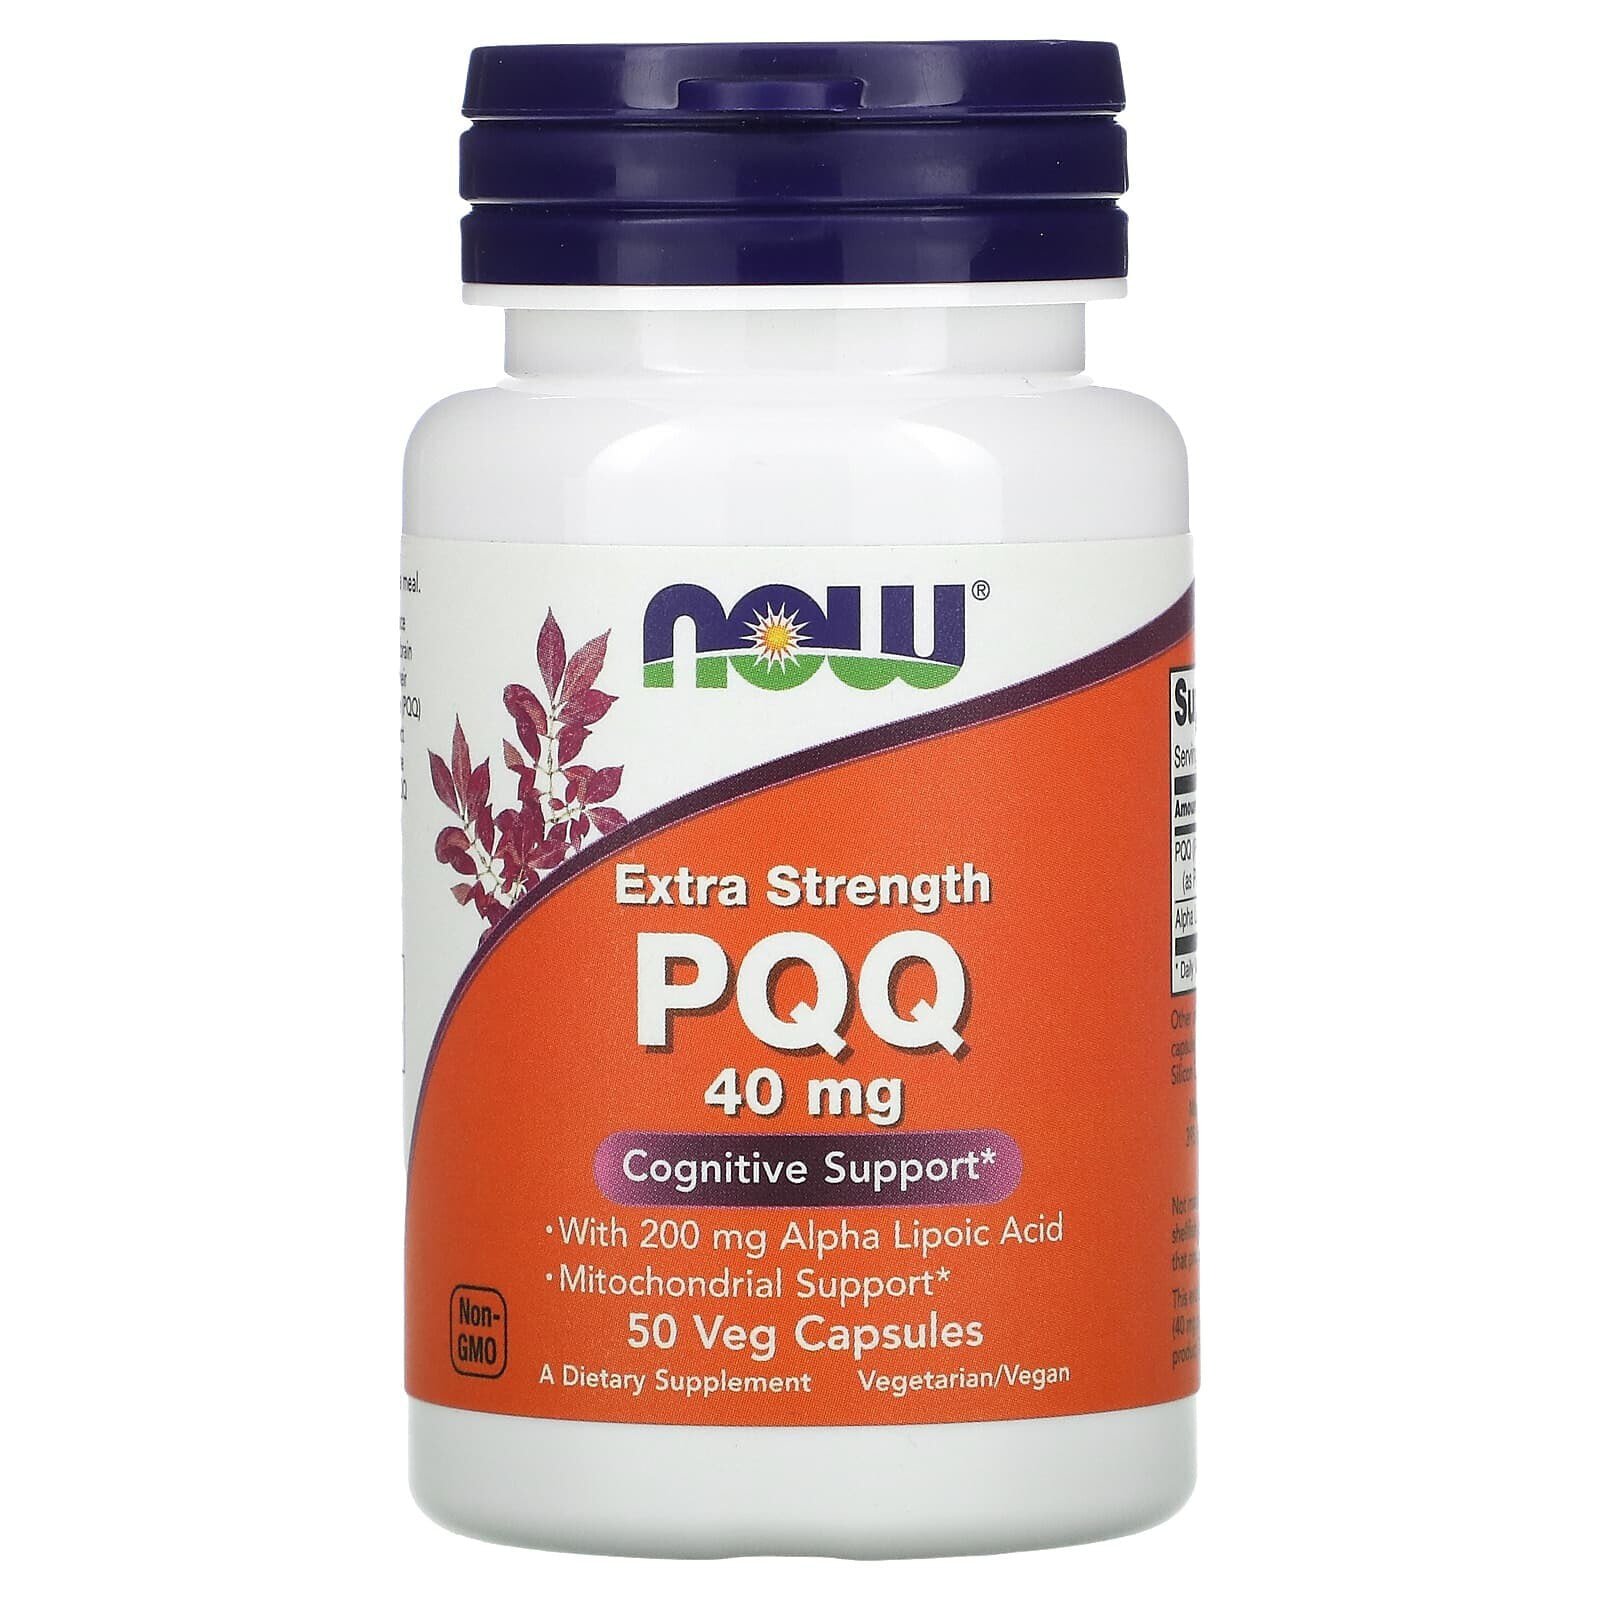 Extra Strength PQQ, 40 mg, 50 Veg Capsules